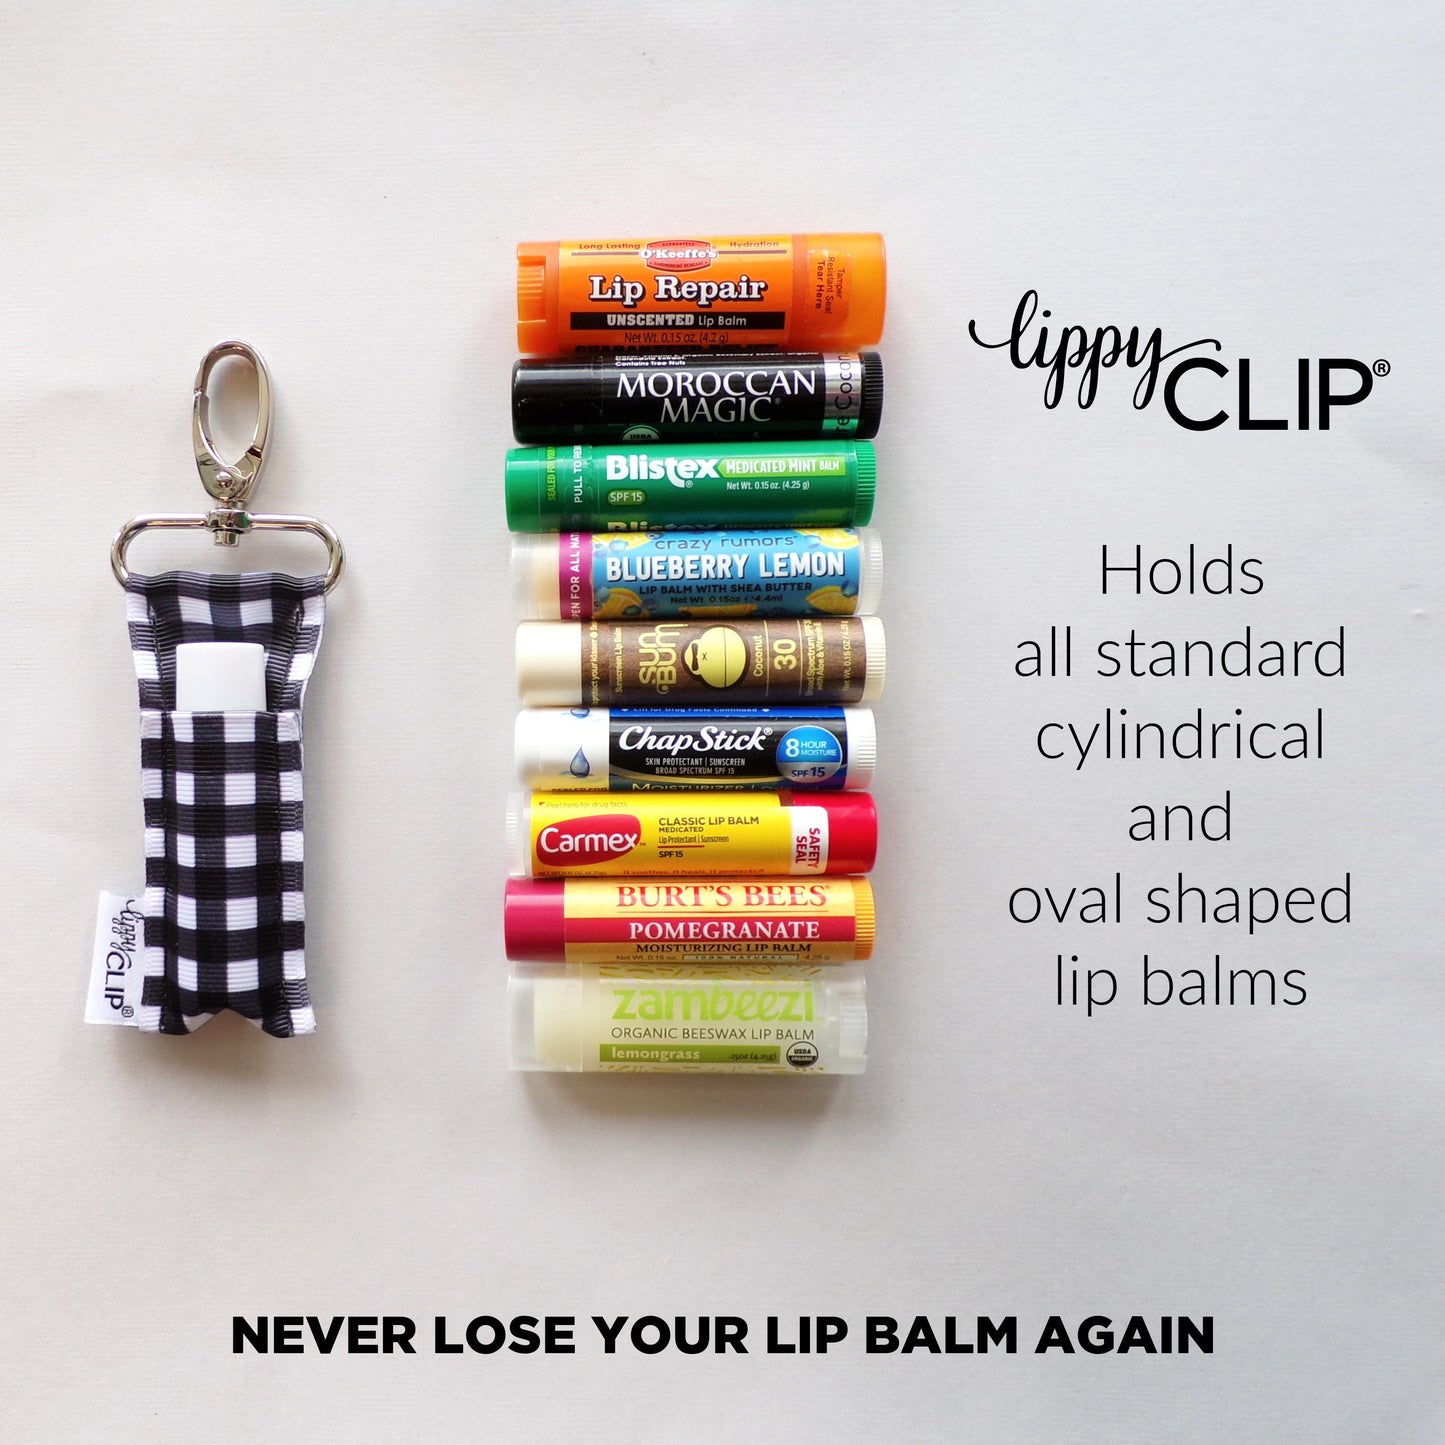 Volleyball LippyClip® Lip Balm Holder